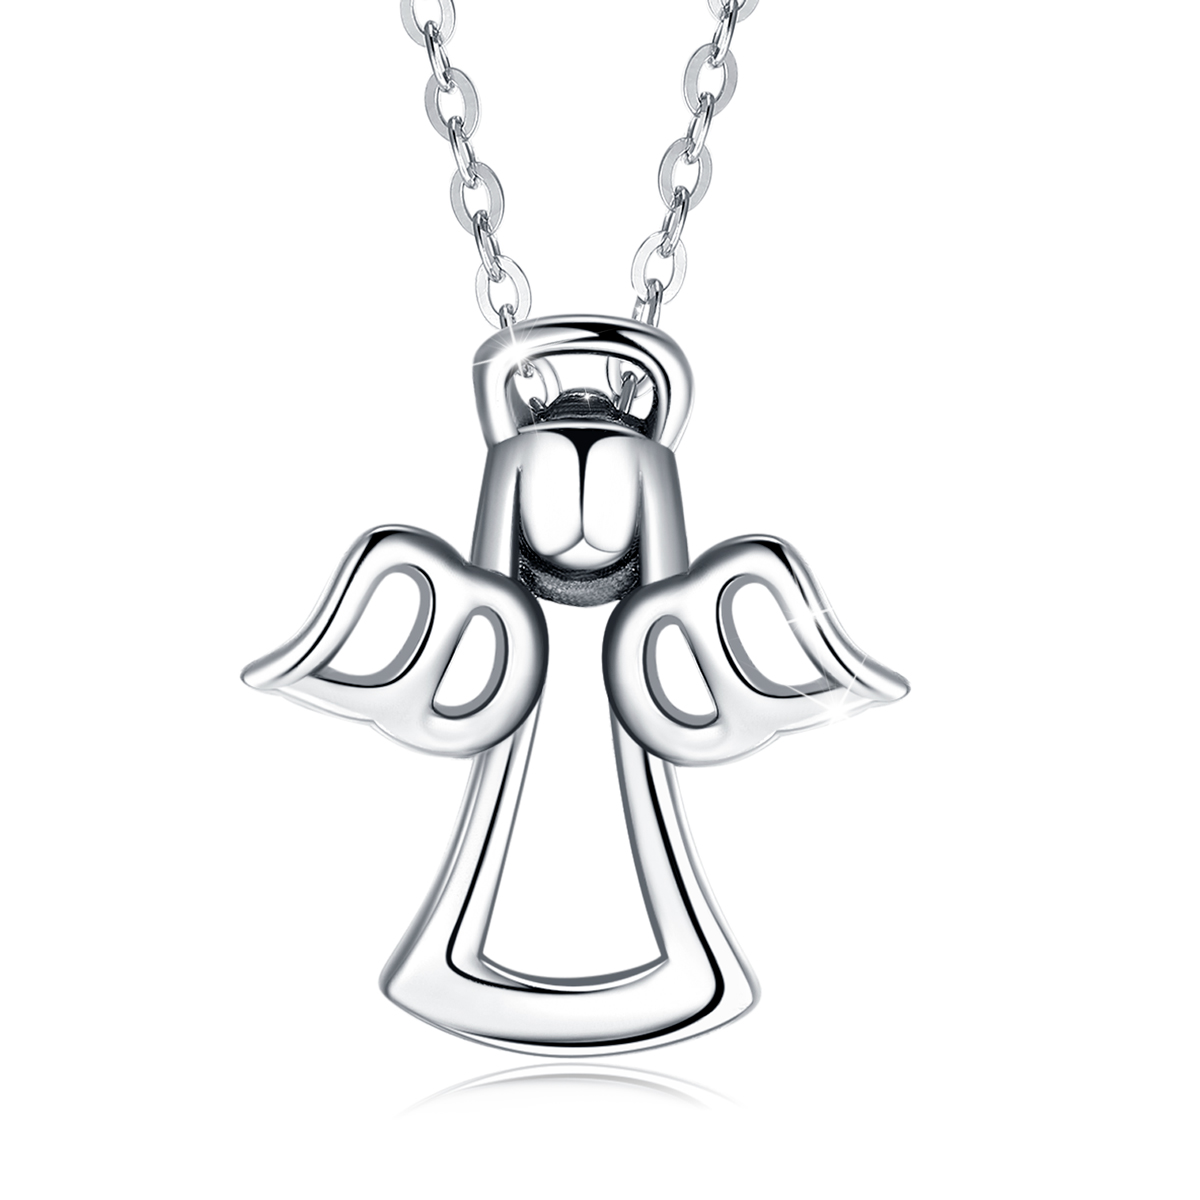 Women party jewelry 925 Sterling Silver little guardian angel pendant charm necklace